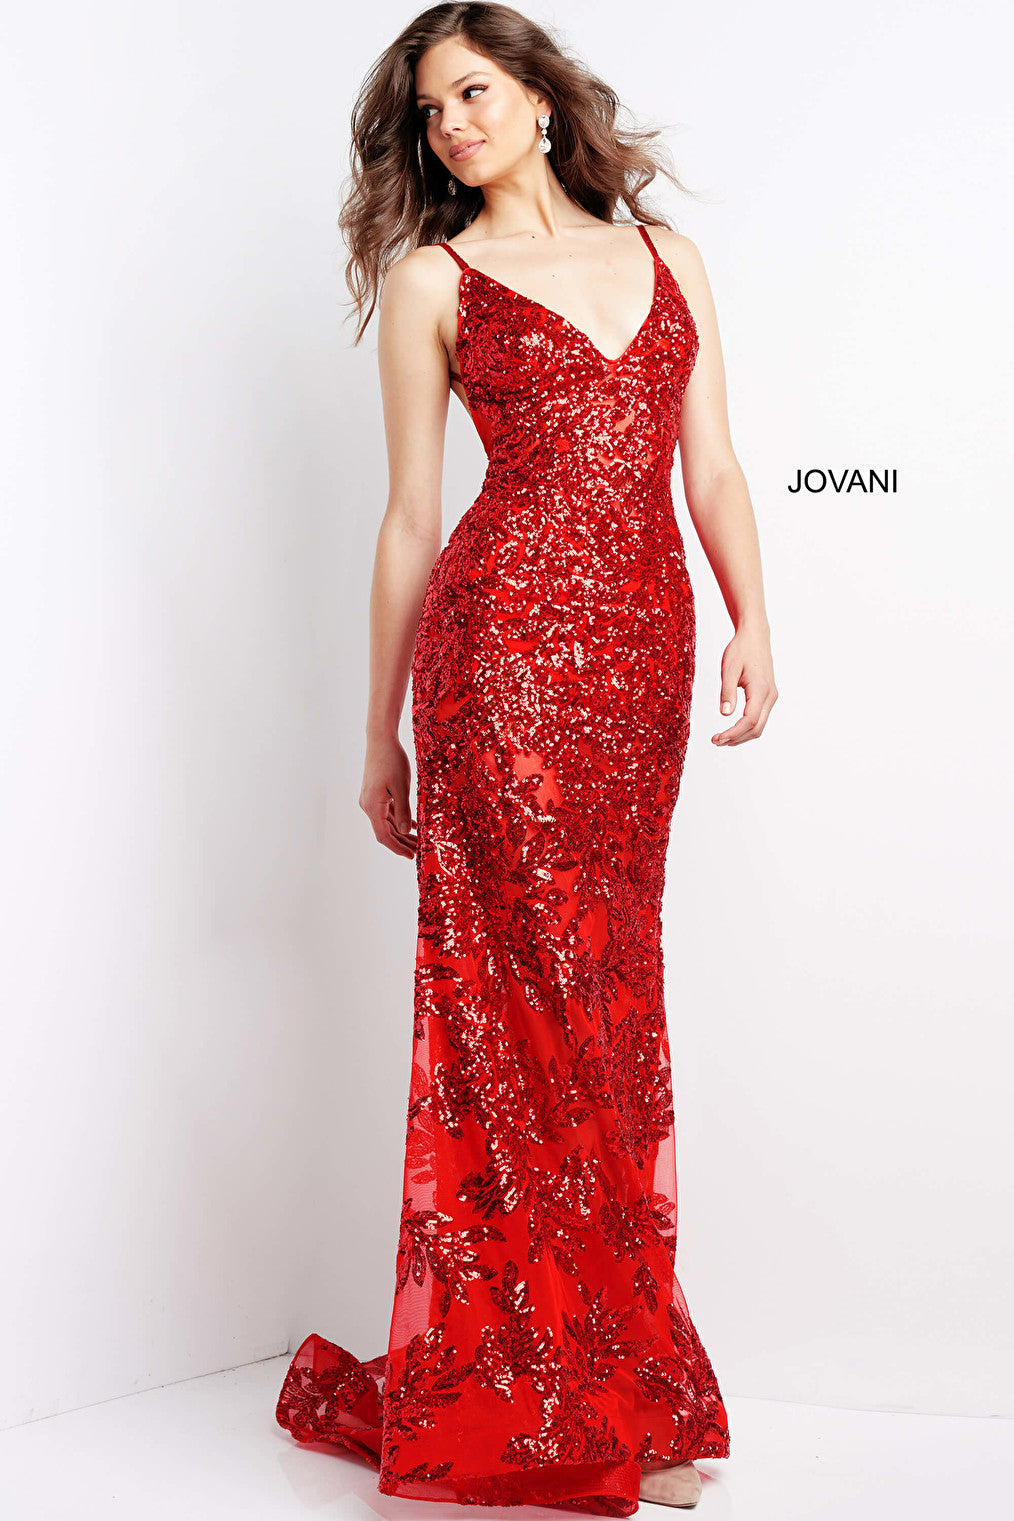 jovani 06203 red dress